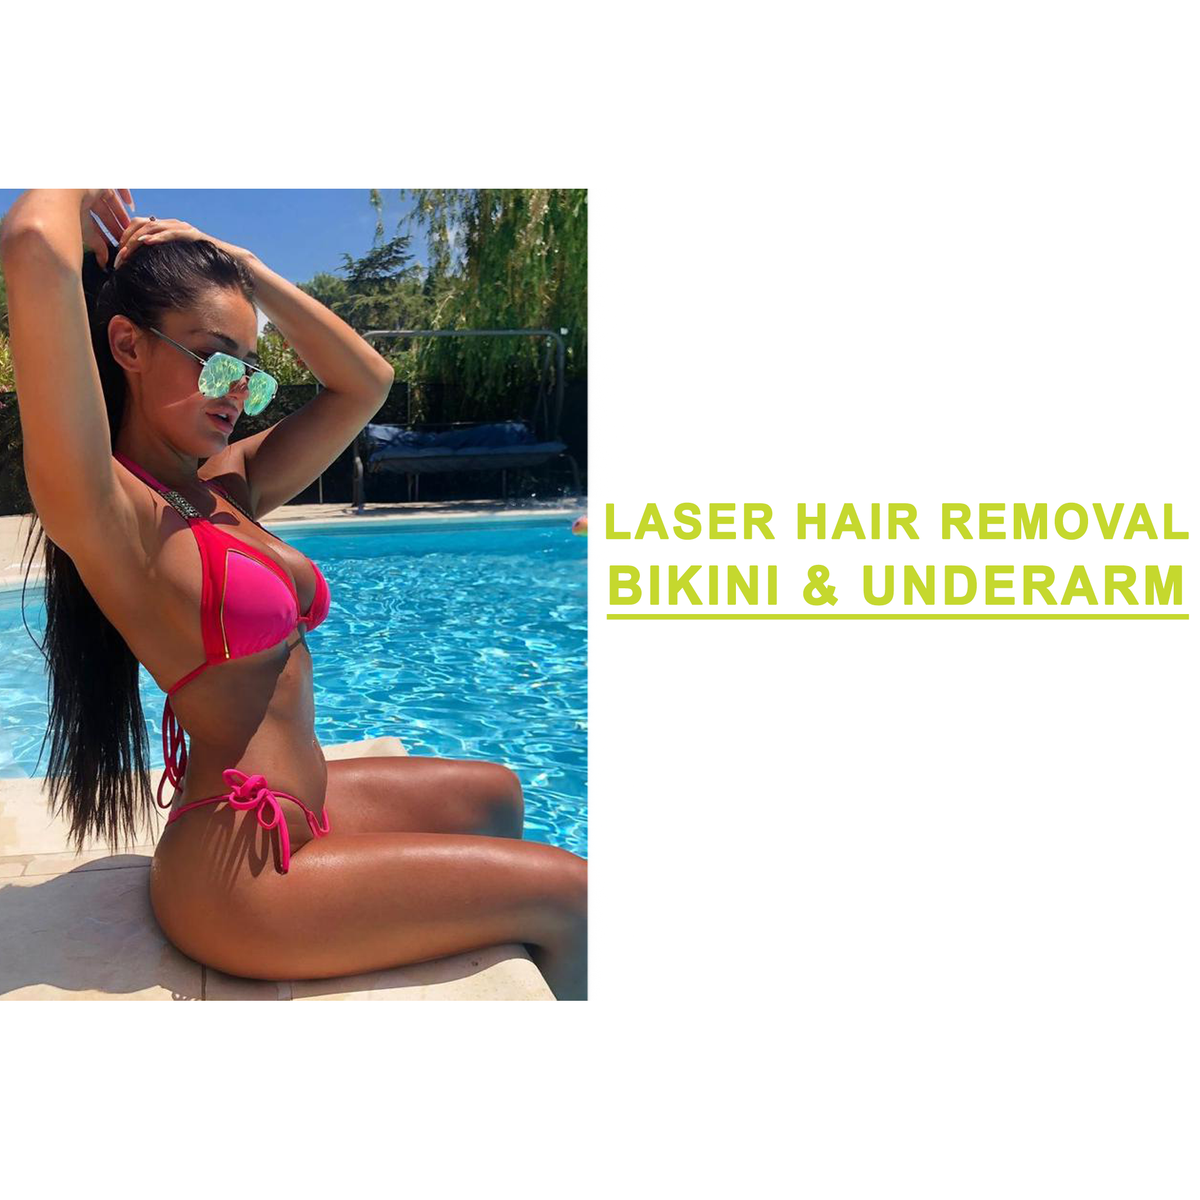 Laser hair removal Bikini & Underarm 6 treatments